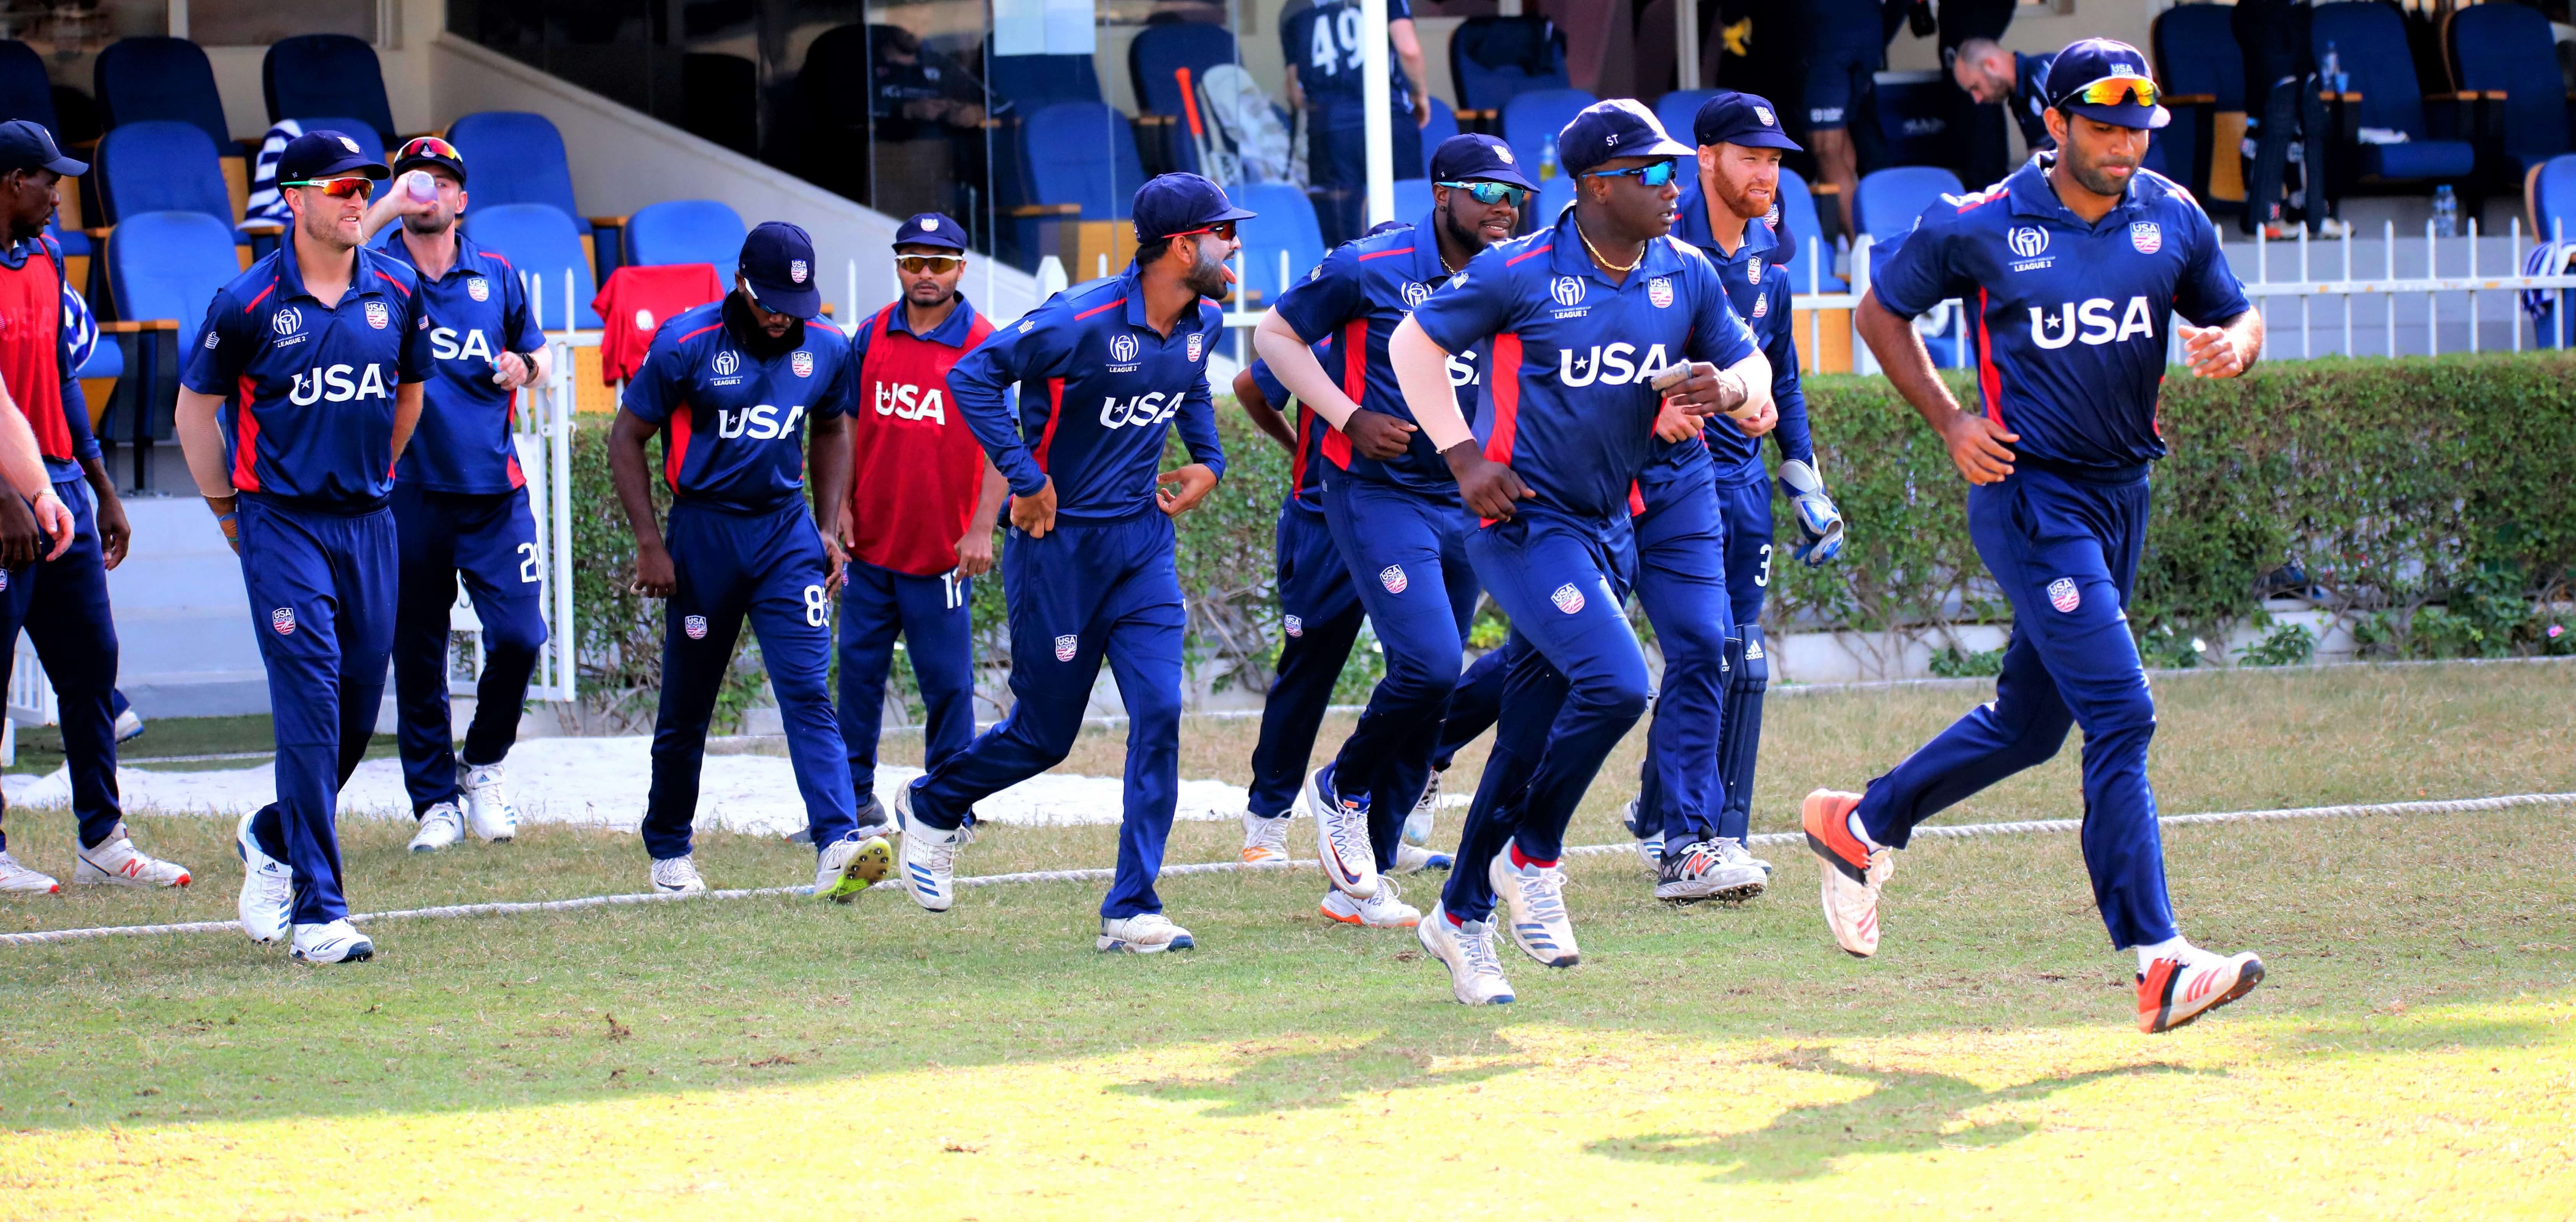 USA Cricket announce application process for Men’s National Team Head Coach